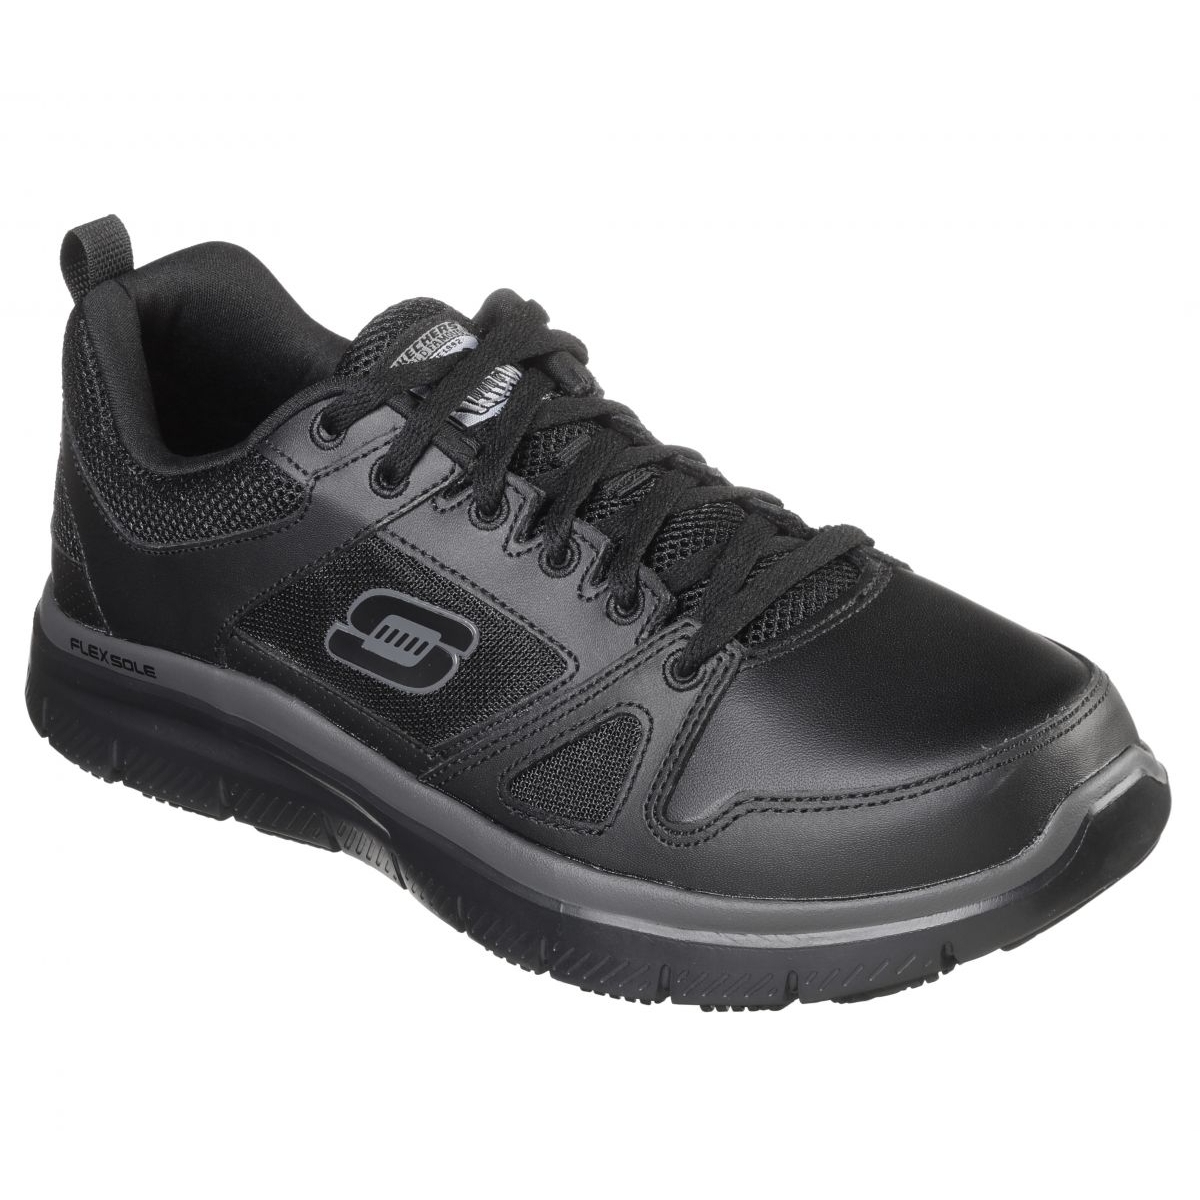 Skechers Men's Flex Advantage SR Work Shoes BLACK - BLACK, 7.5 Wide